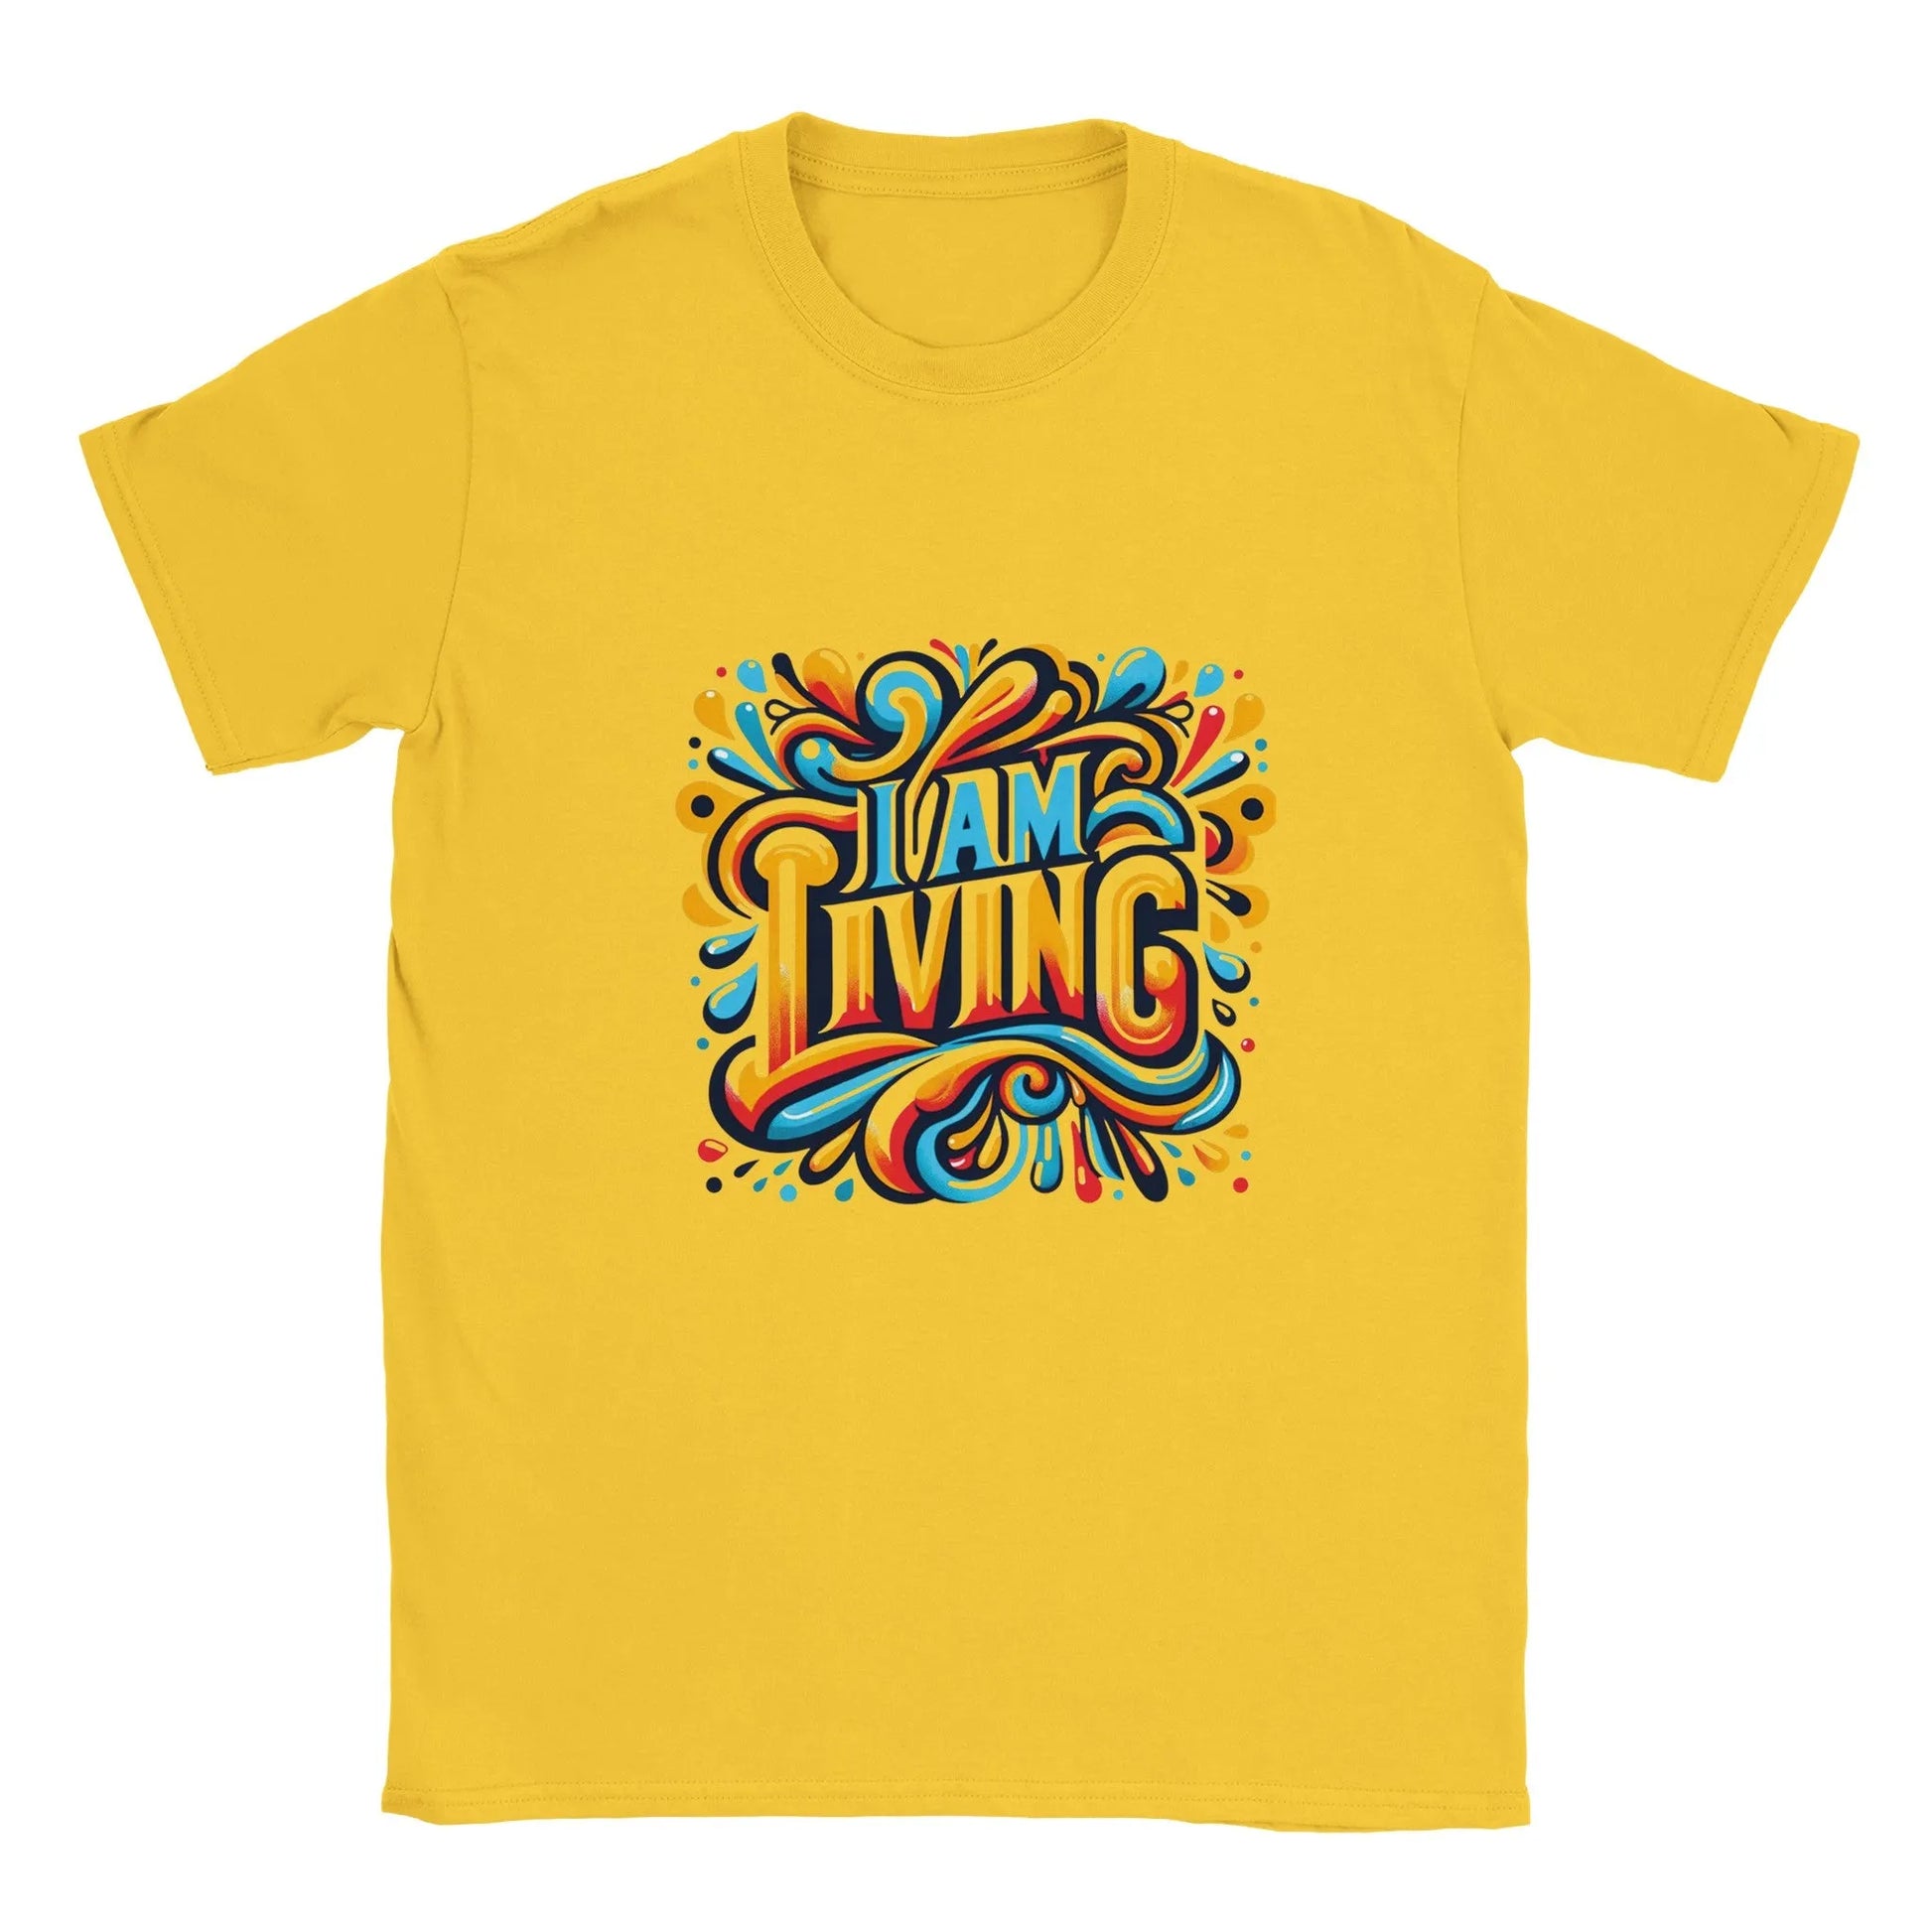 Classic Crewneck "I Am Living" T-Shirt - 100% soft, breathable cotton - BeinCart